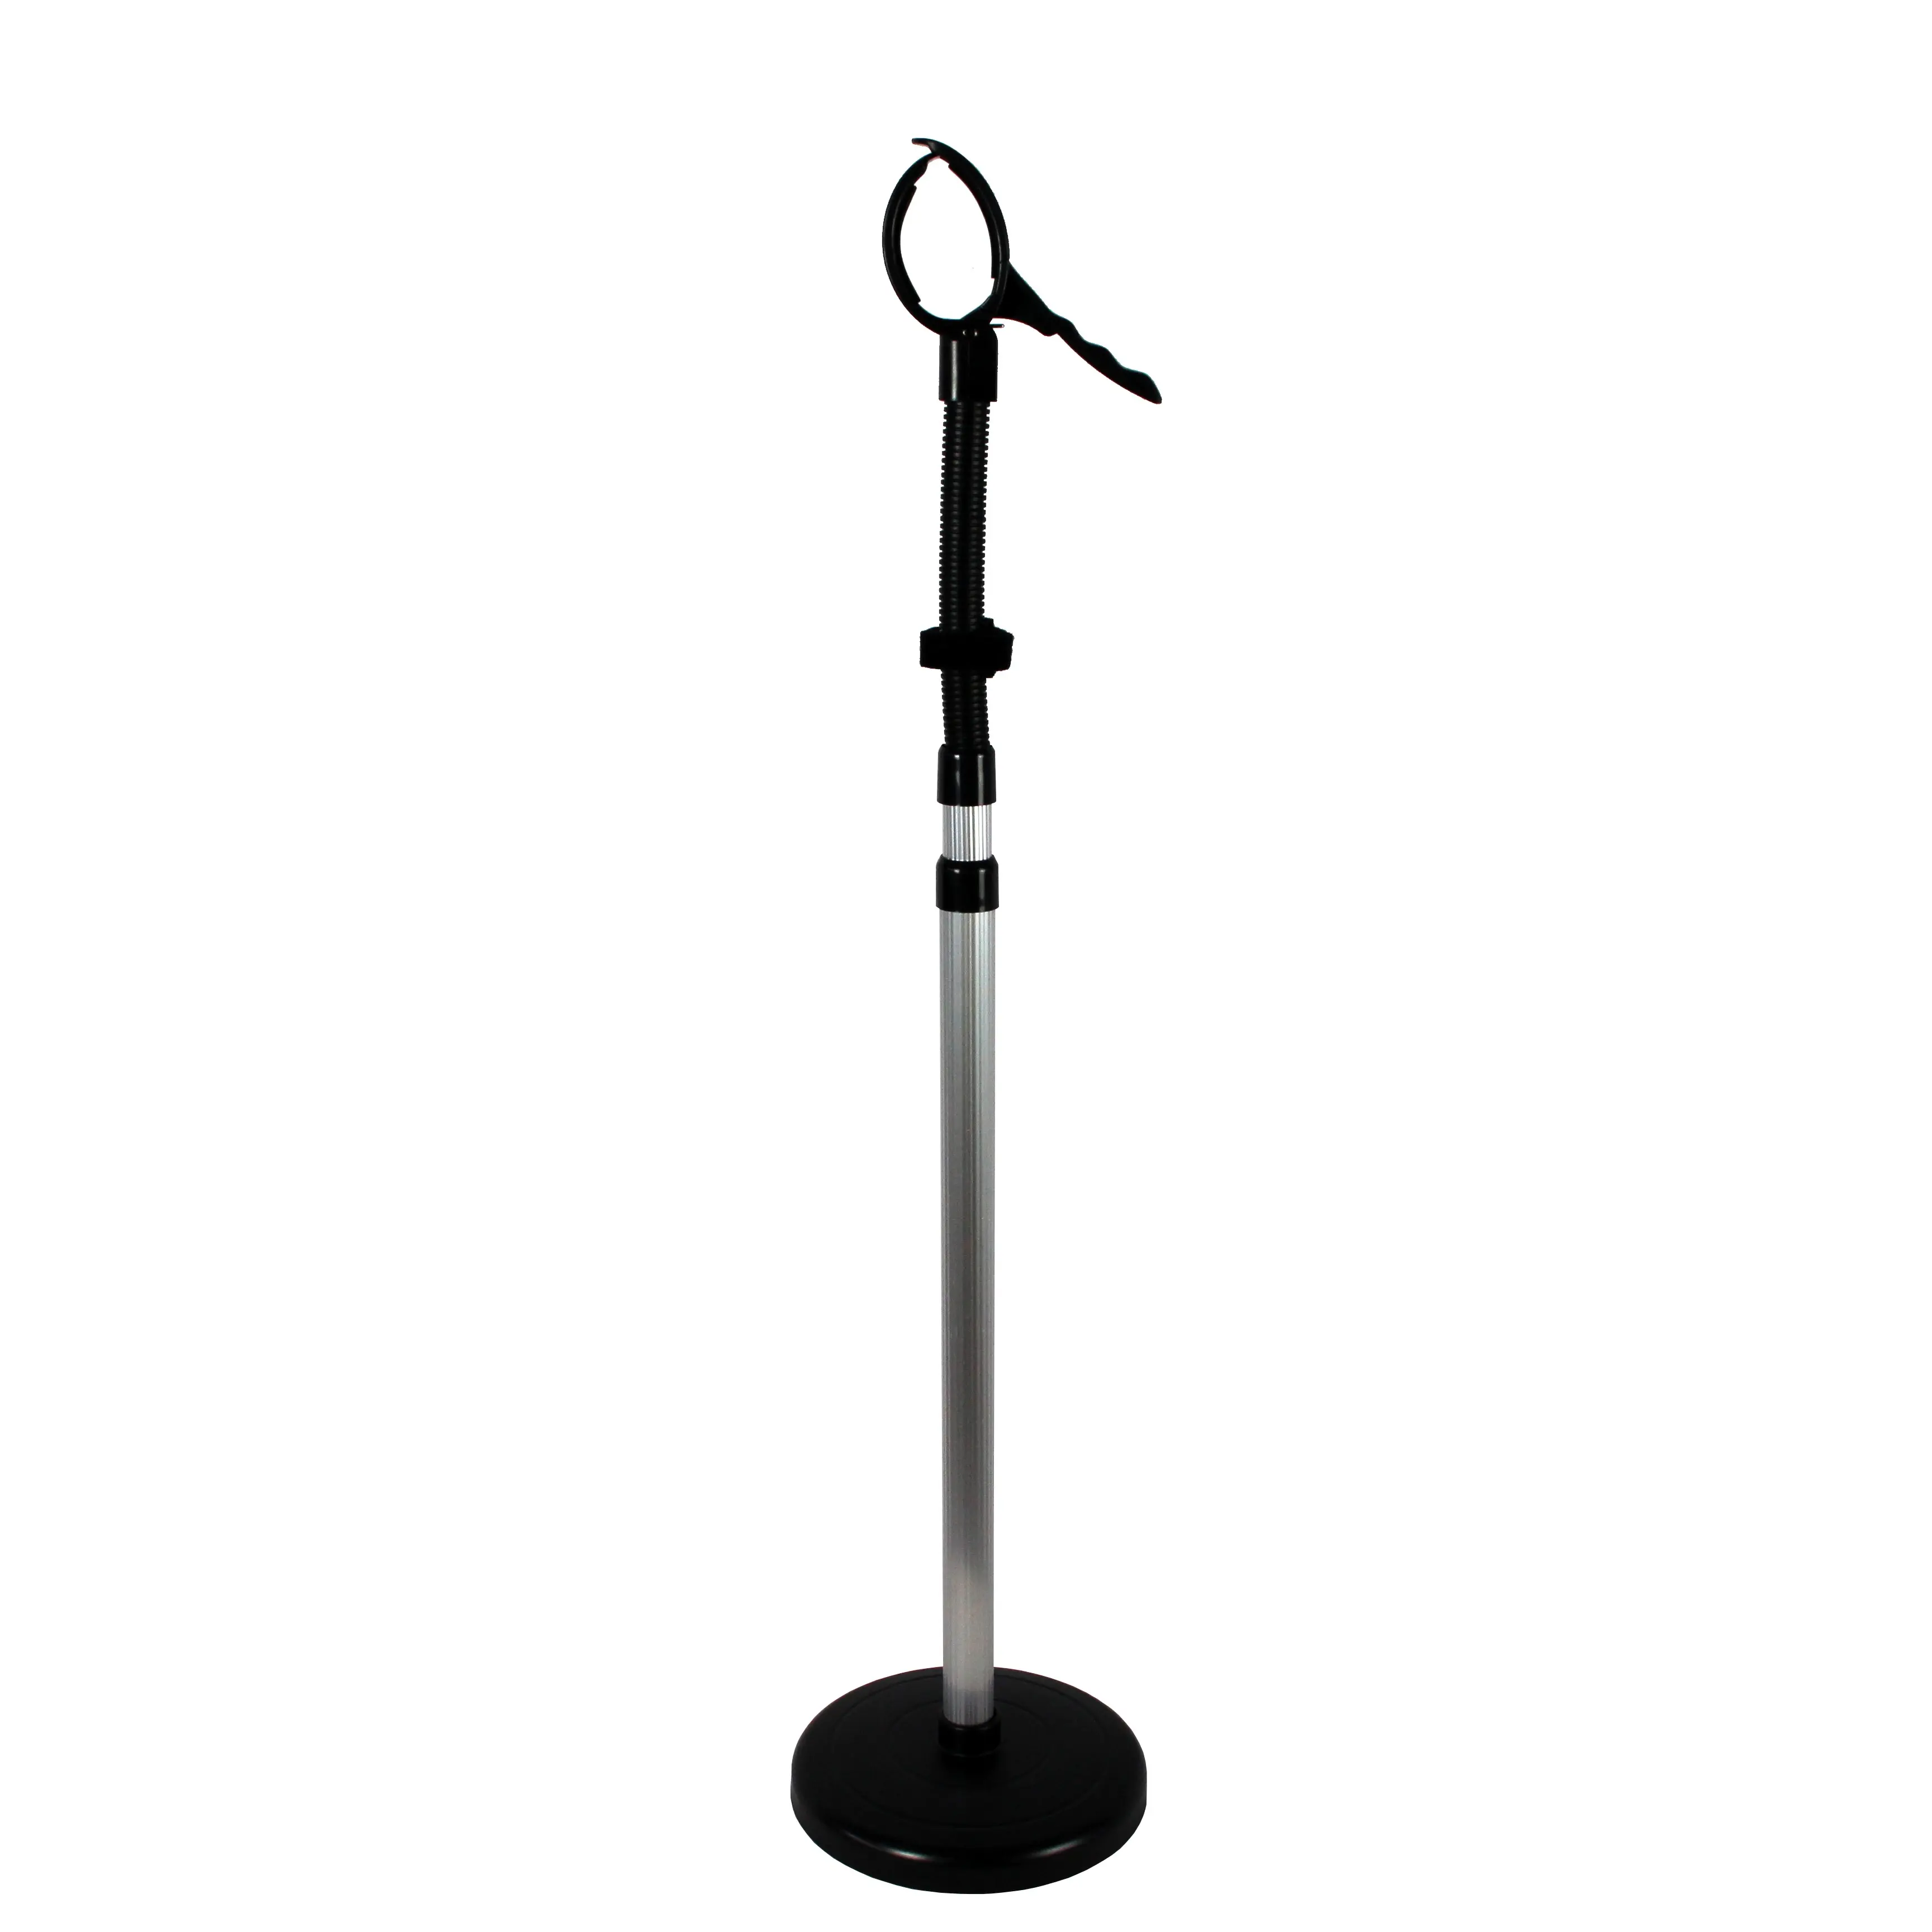 Adjustable height telescopic aluminium alloy 360 degree rotating Lazy man pet hair dryer shelf rack holder stand